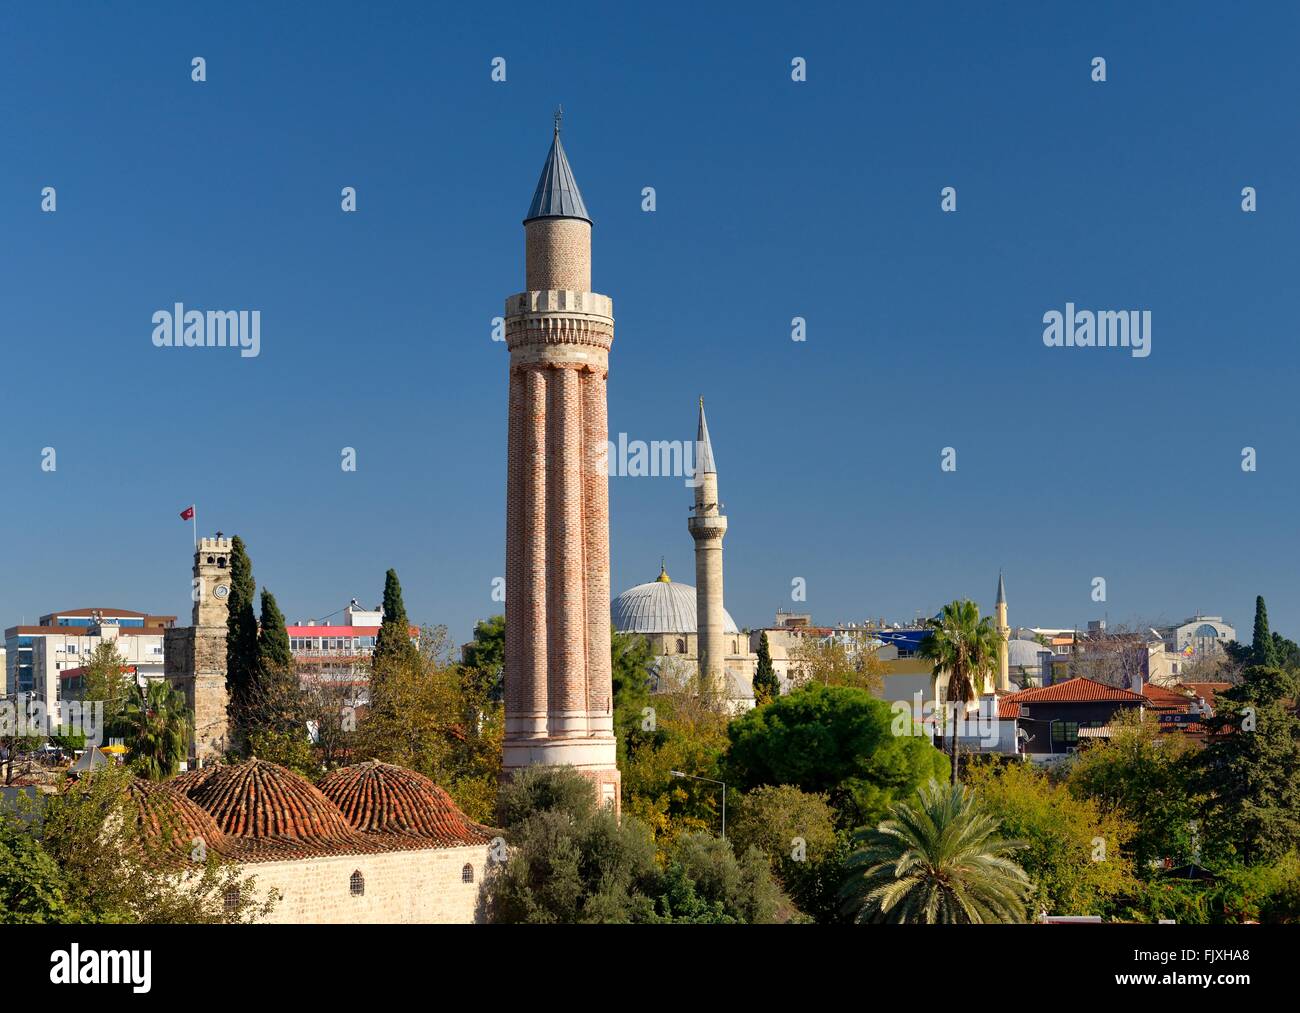 The ancient Fluted Minaret Mosque aka Yivli Minare, Alaaddin, Ulu Cami Camii Grand. Kaleici old town centre of Antalya, Turkey Stock Photo